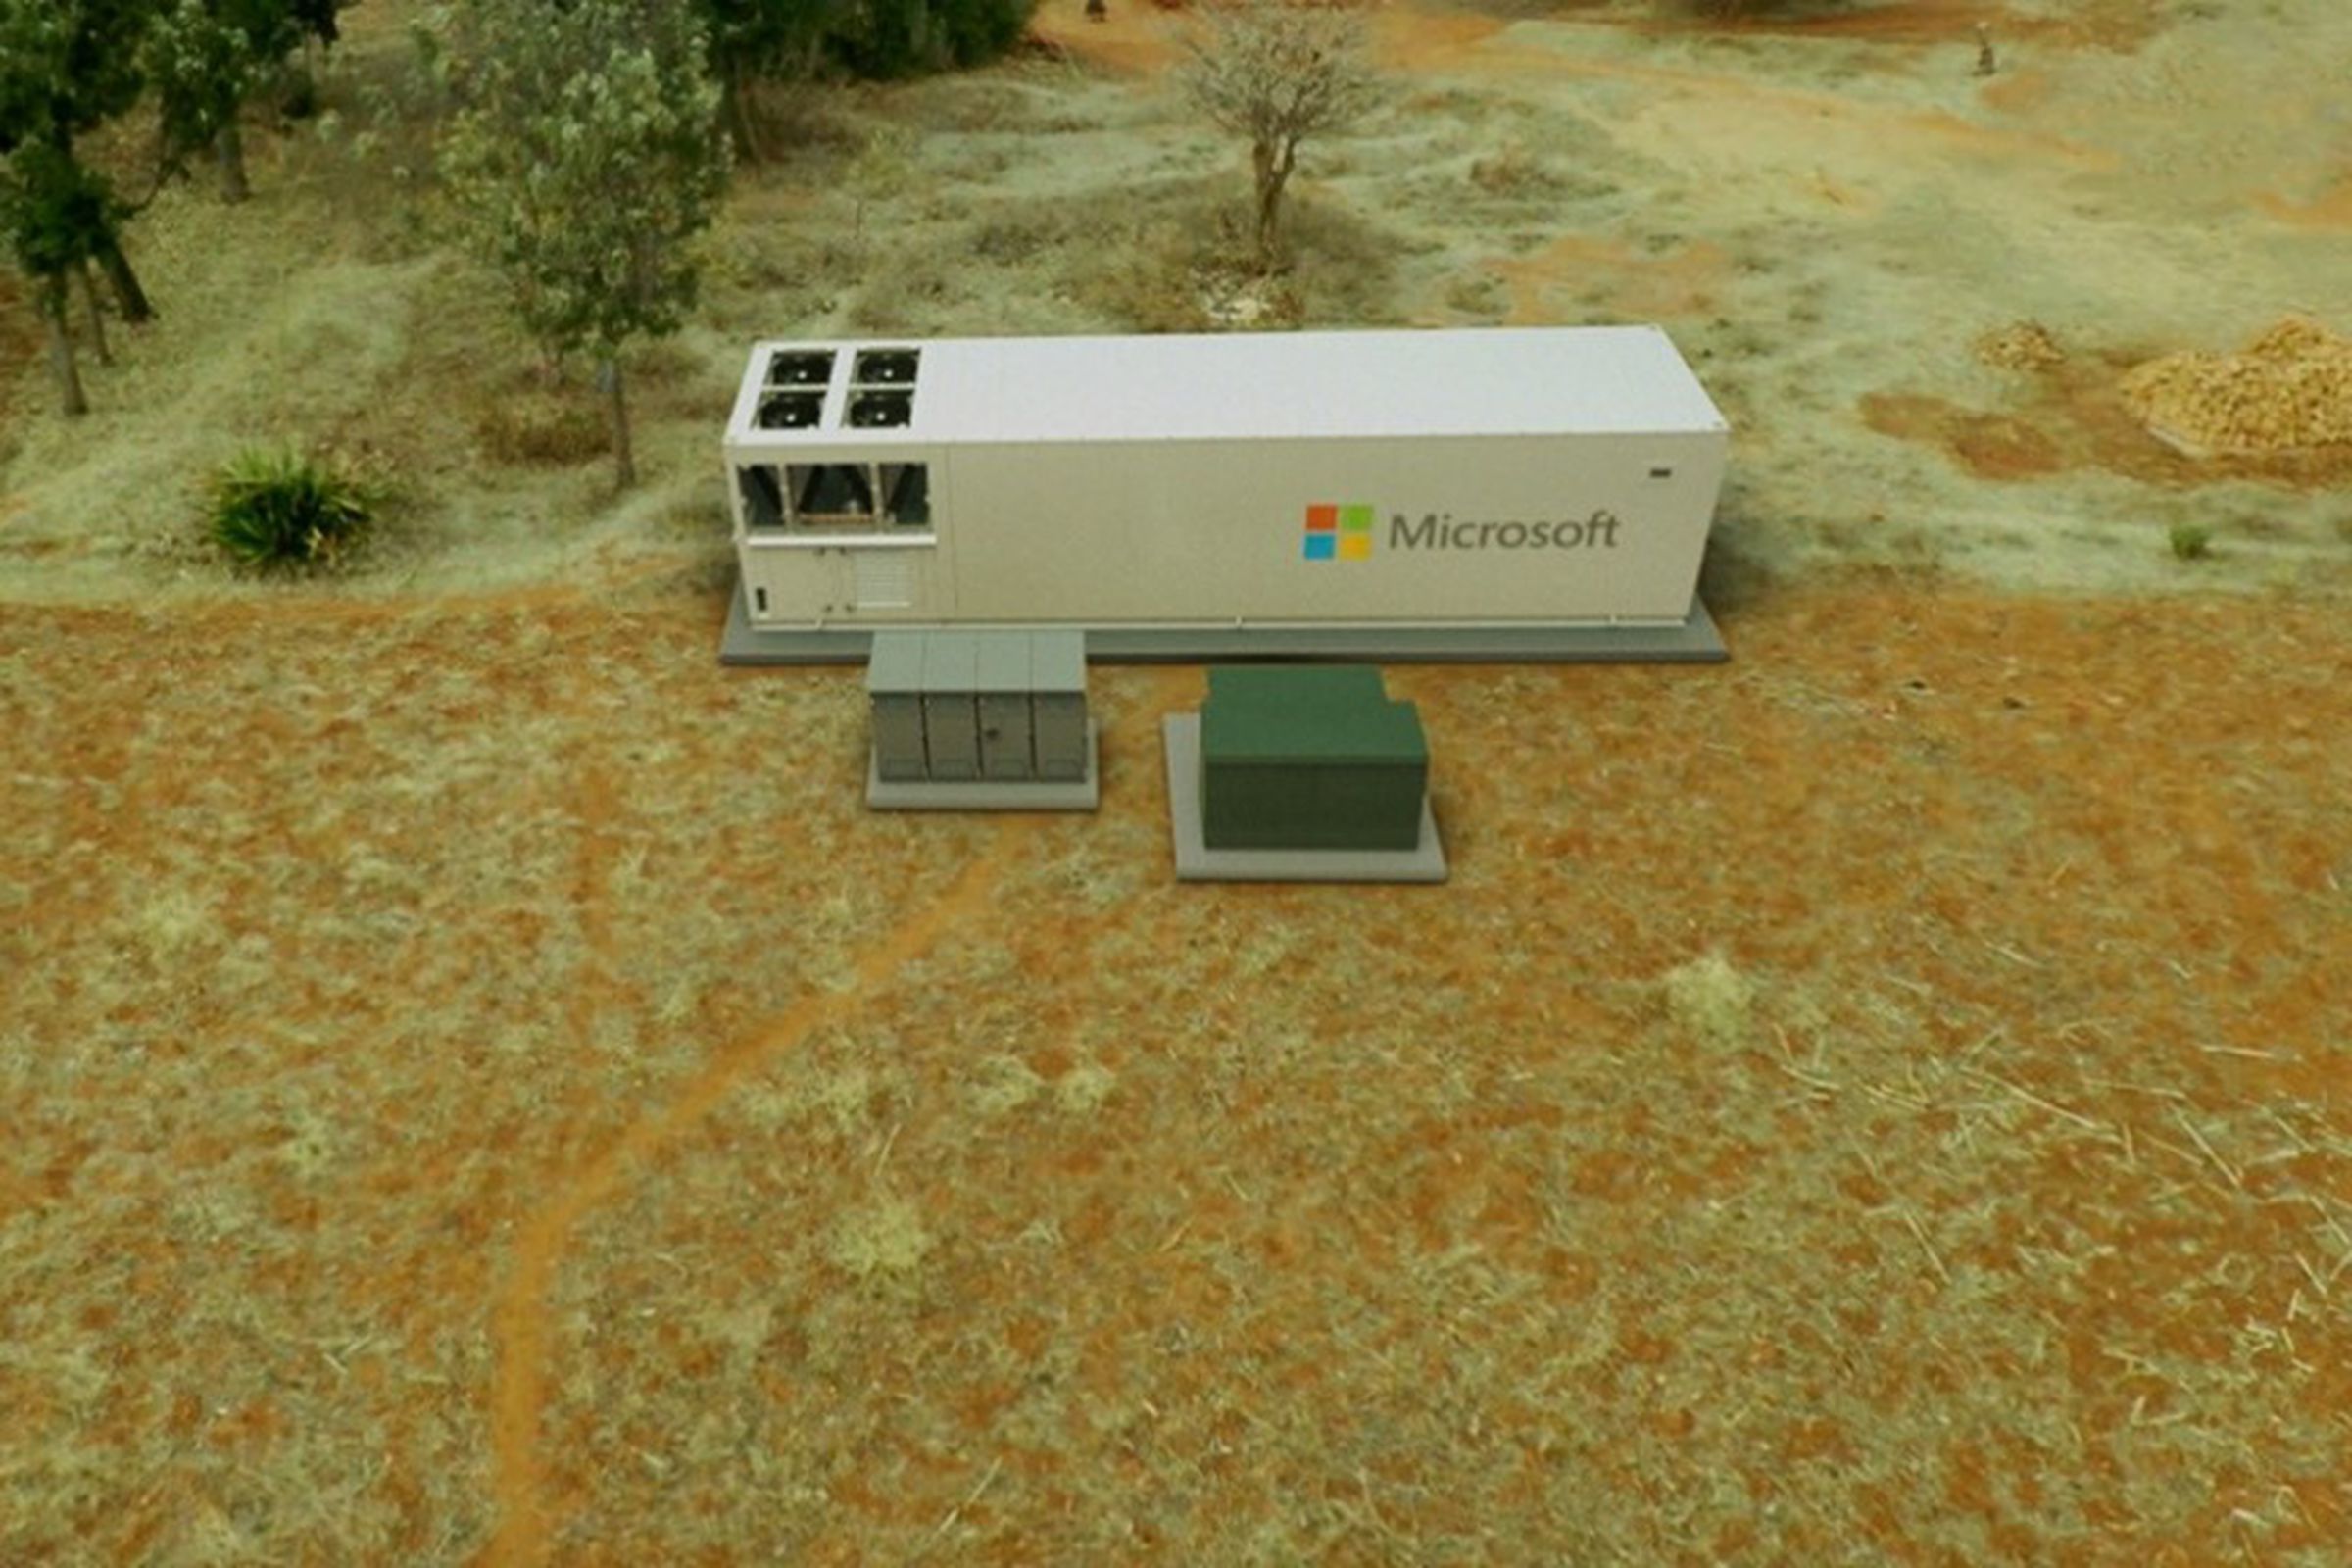 Microsoft’s portable data center.